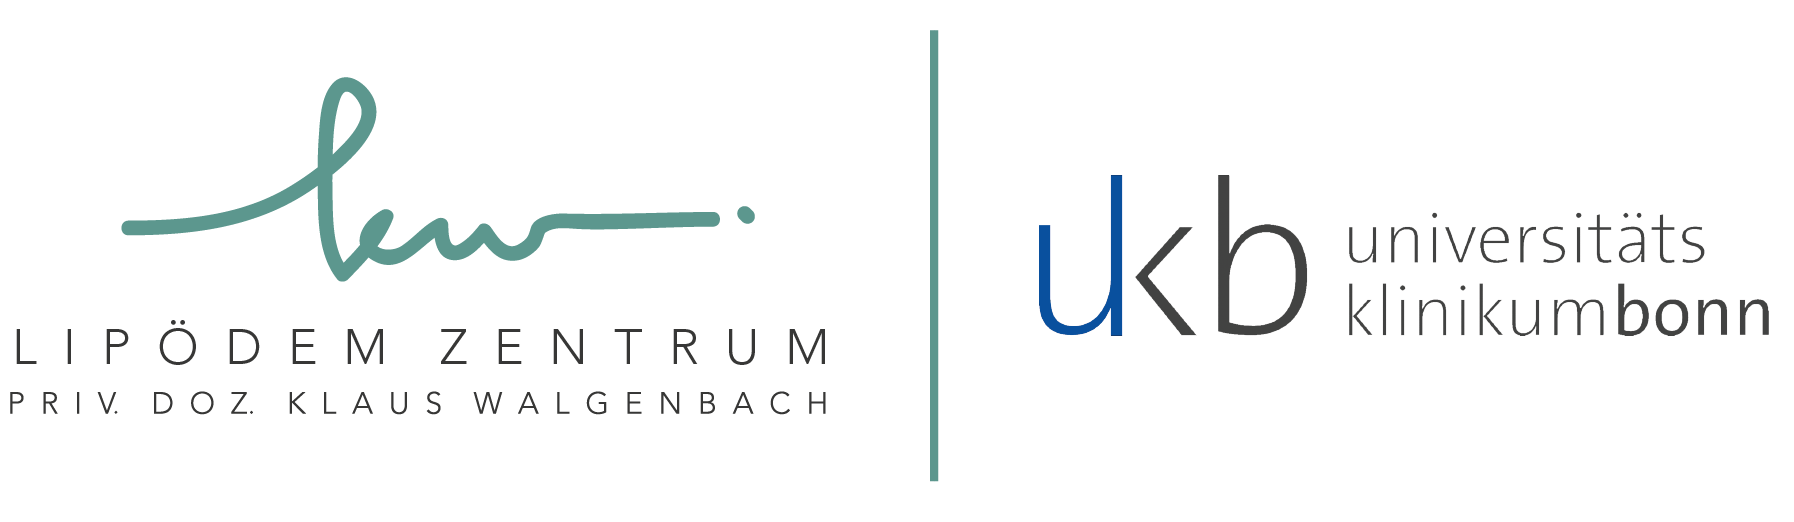 Lipödemzentrum Dr. Klaus Walgenbach Logo